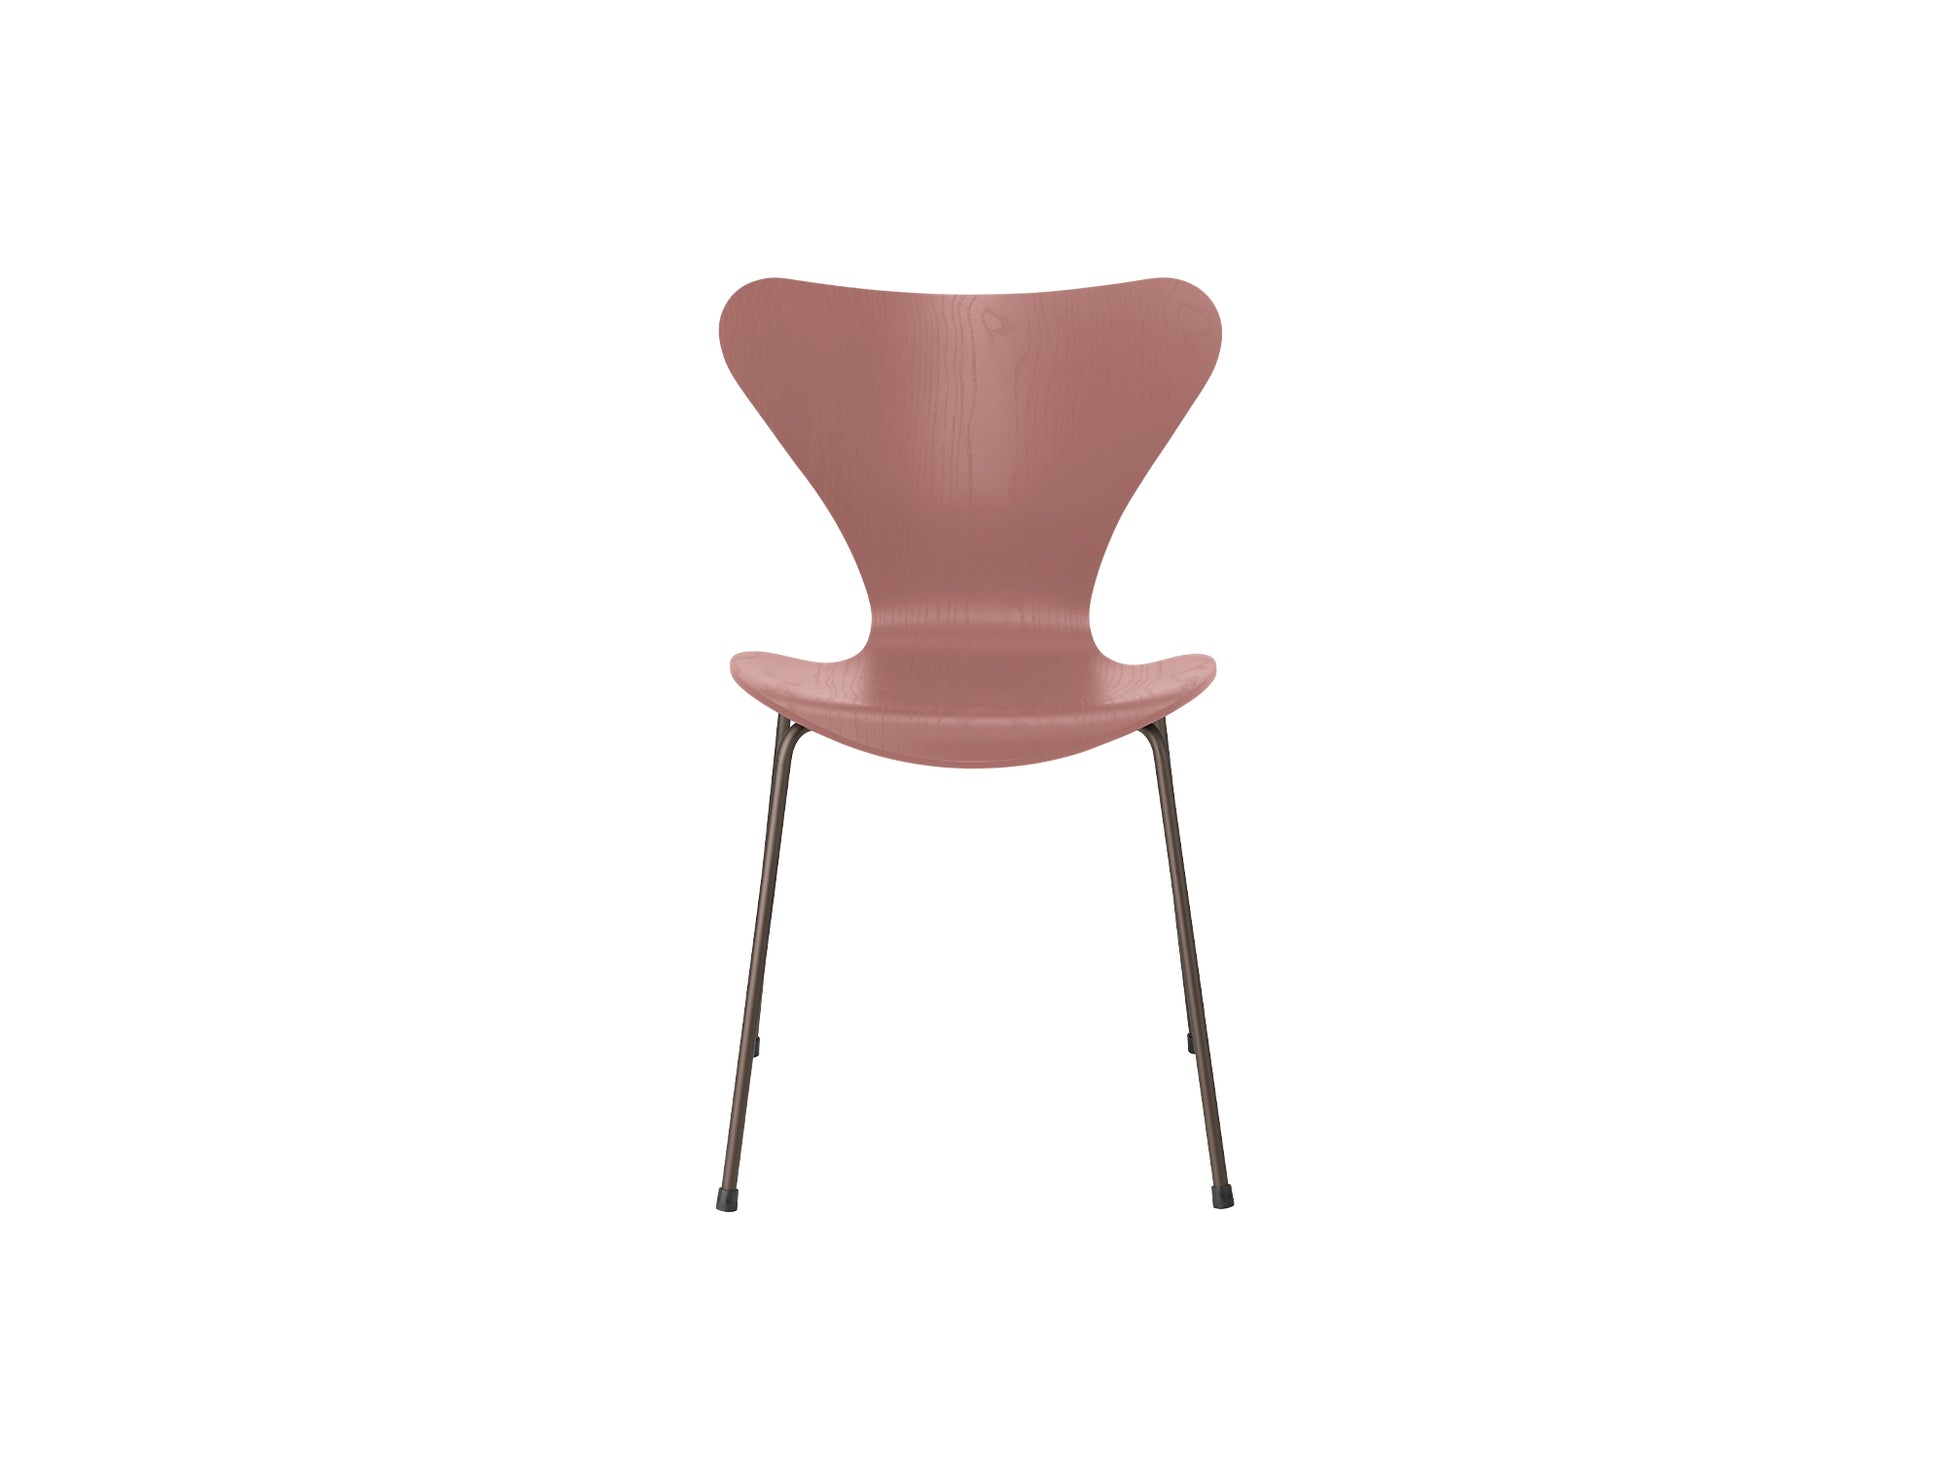 Series 7™ 3107 Dining Chair by Fritz Hansen - Wild Rose Coloured Ash Veneer Shell / Brown Bronze Steel